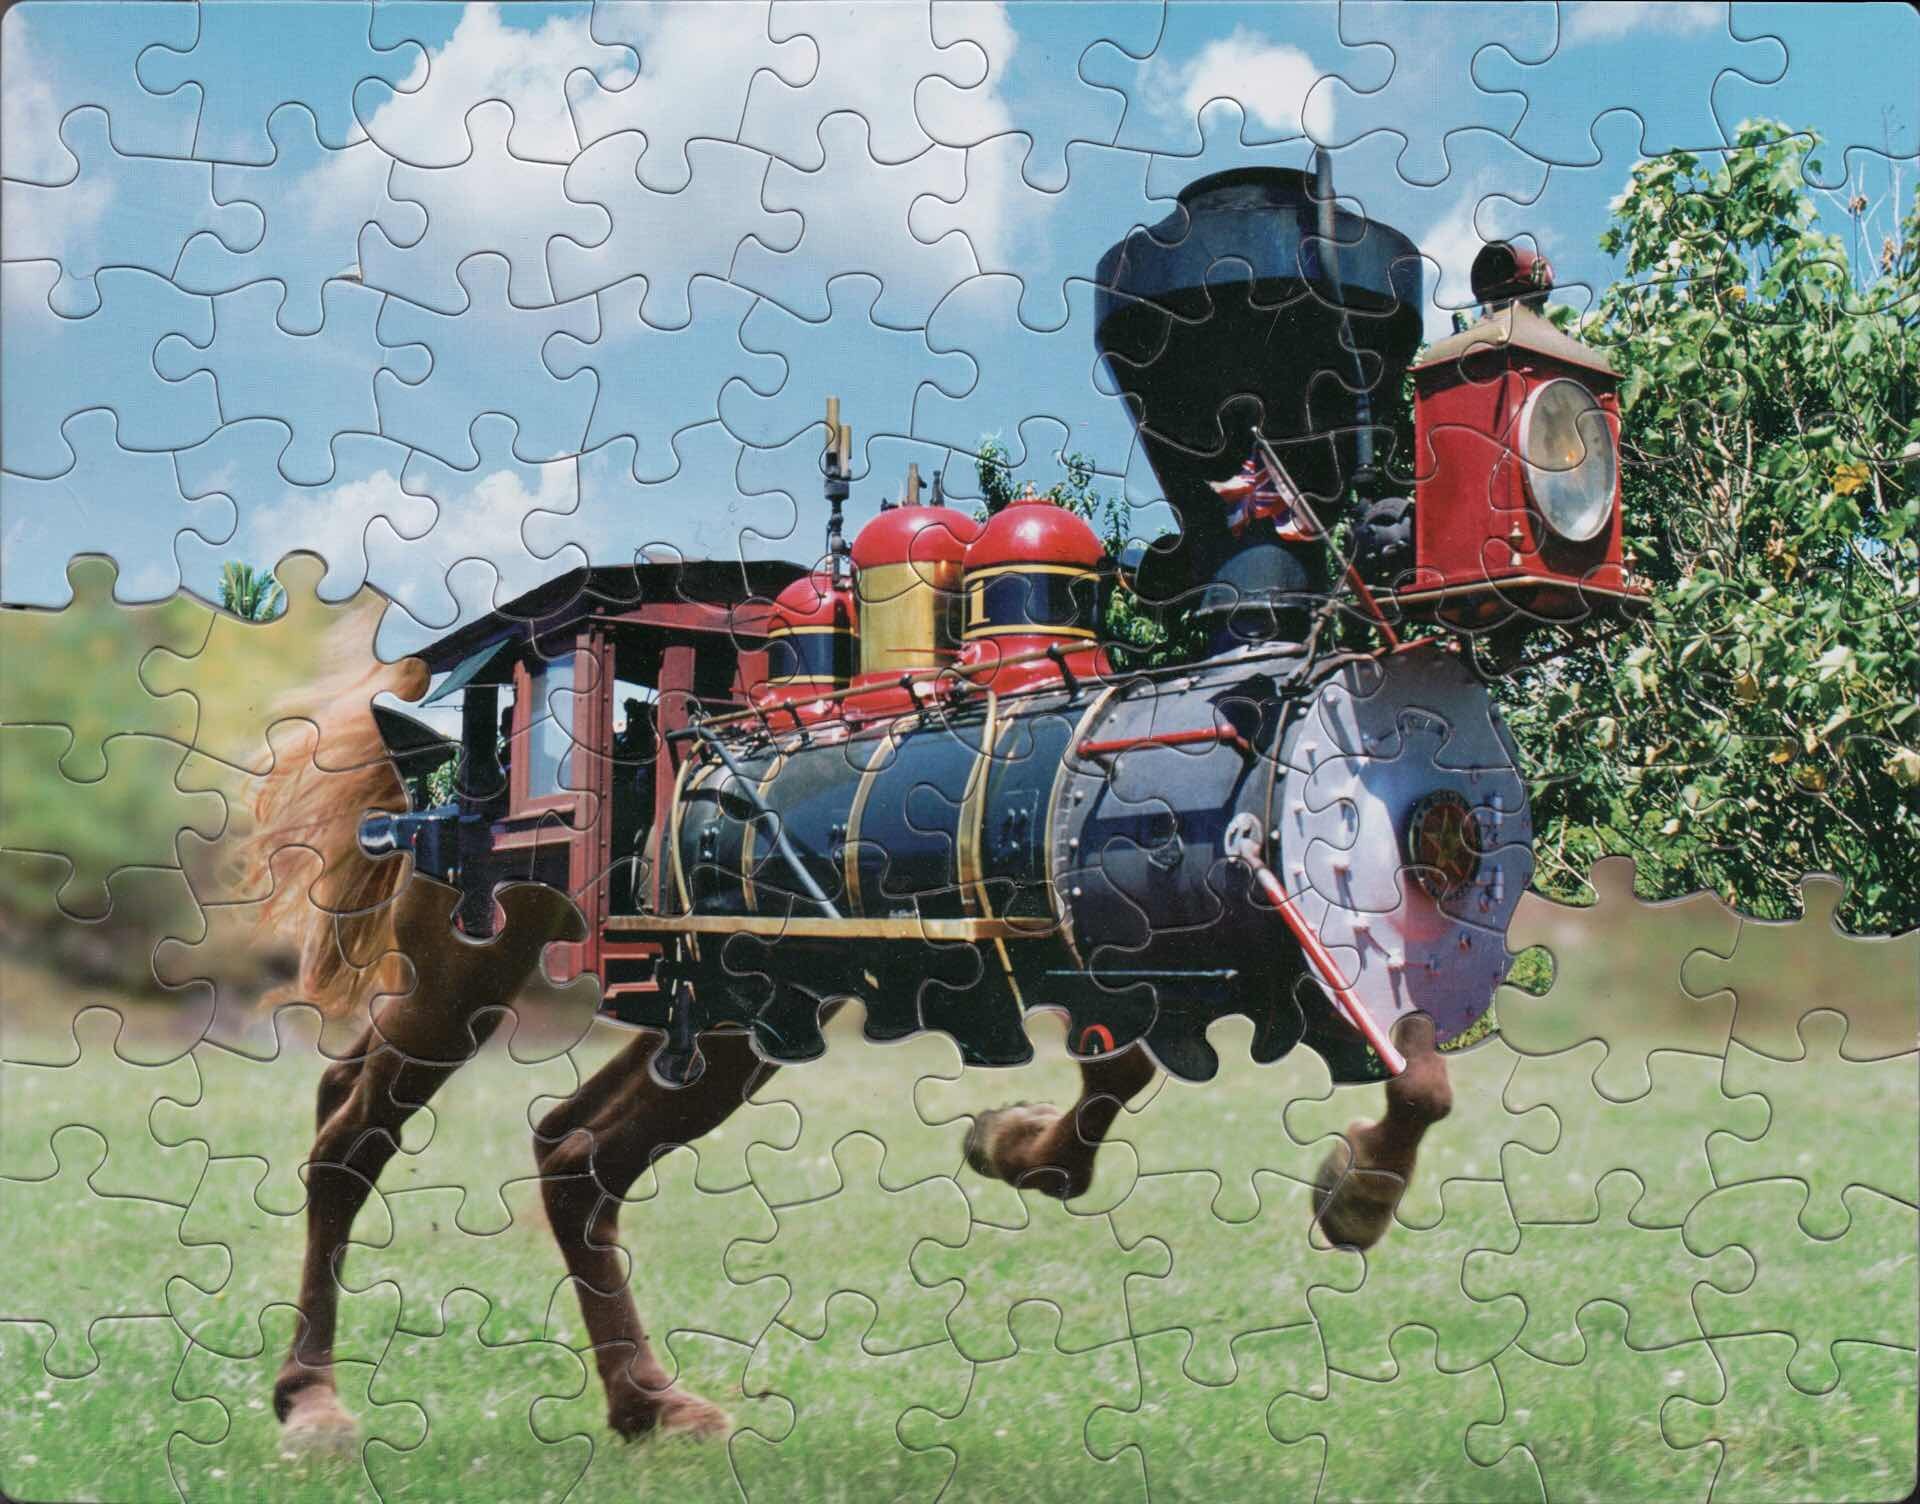 Puzzle montage by Tim Klein